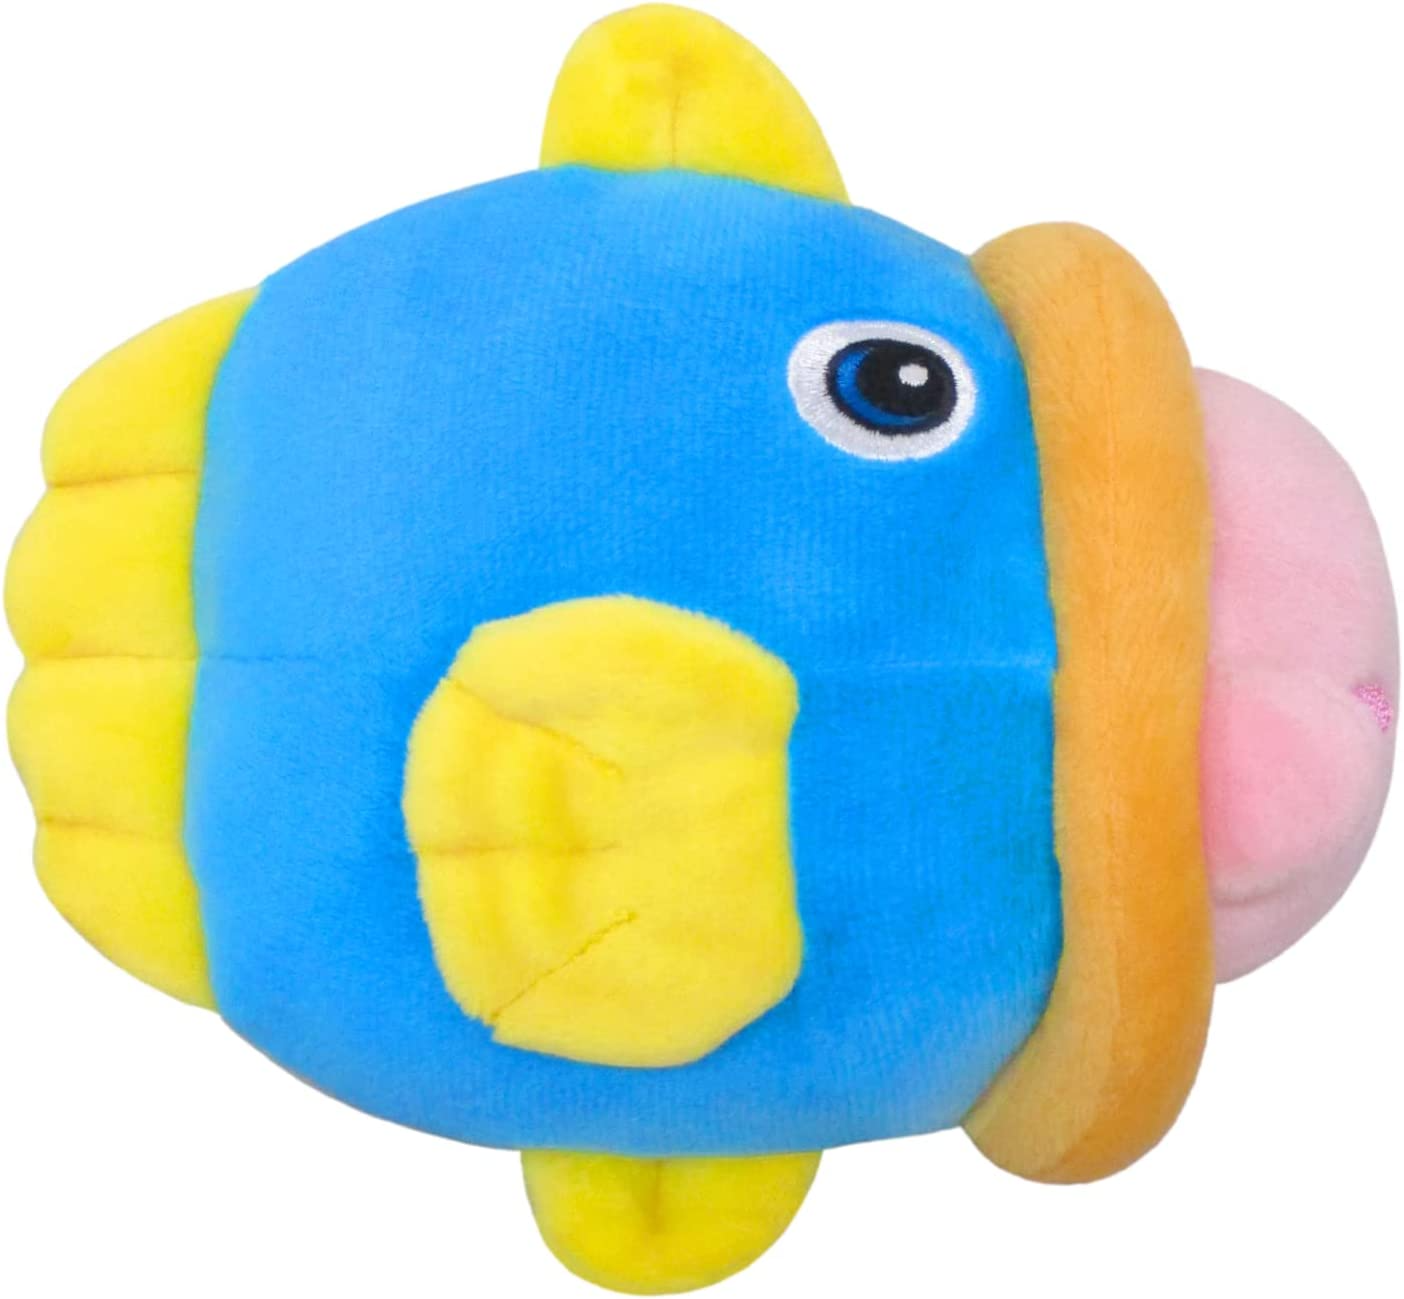 KINE FISH KIRBY 30th Anniversary Sanei Nakama Plush Toy (6.1 in - 15.5 cm) NEW